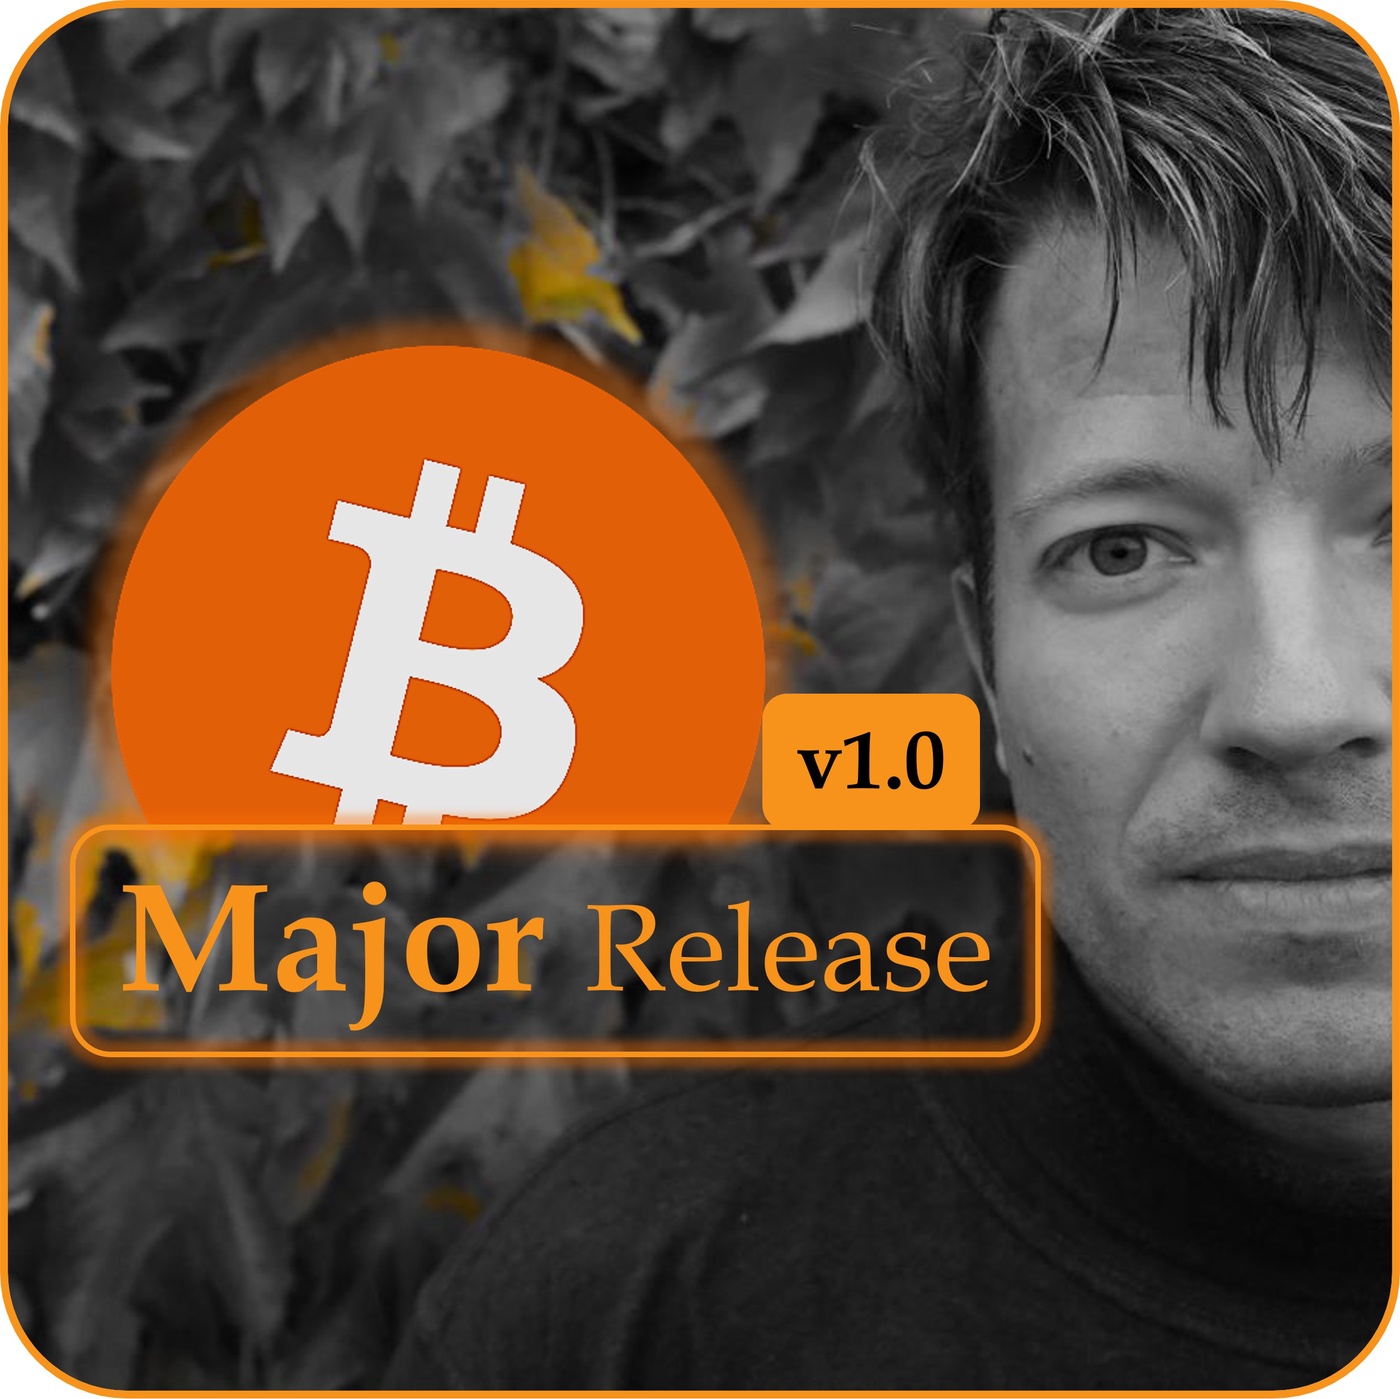 Major Release (v1.0)